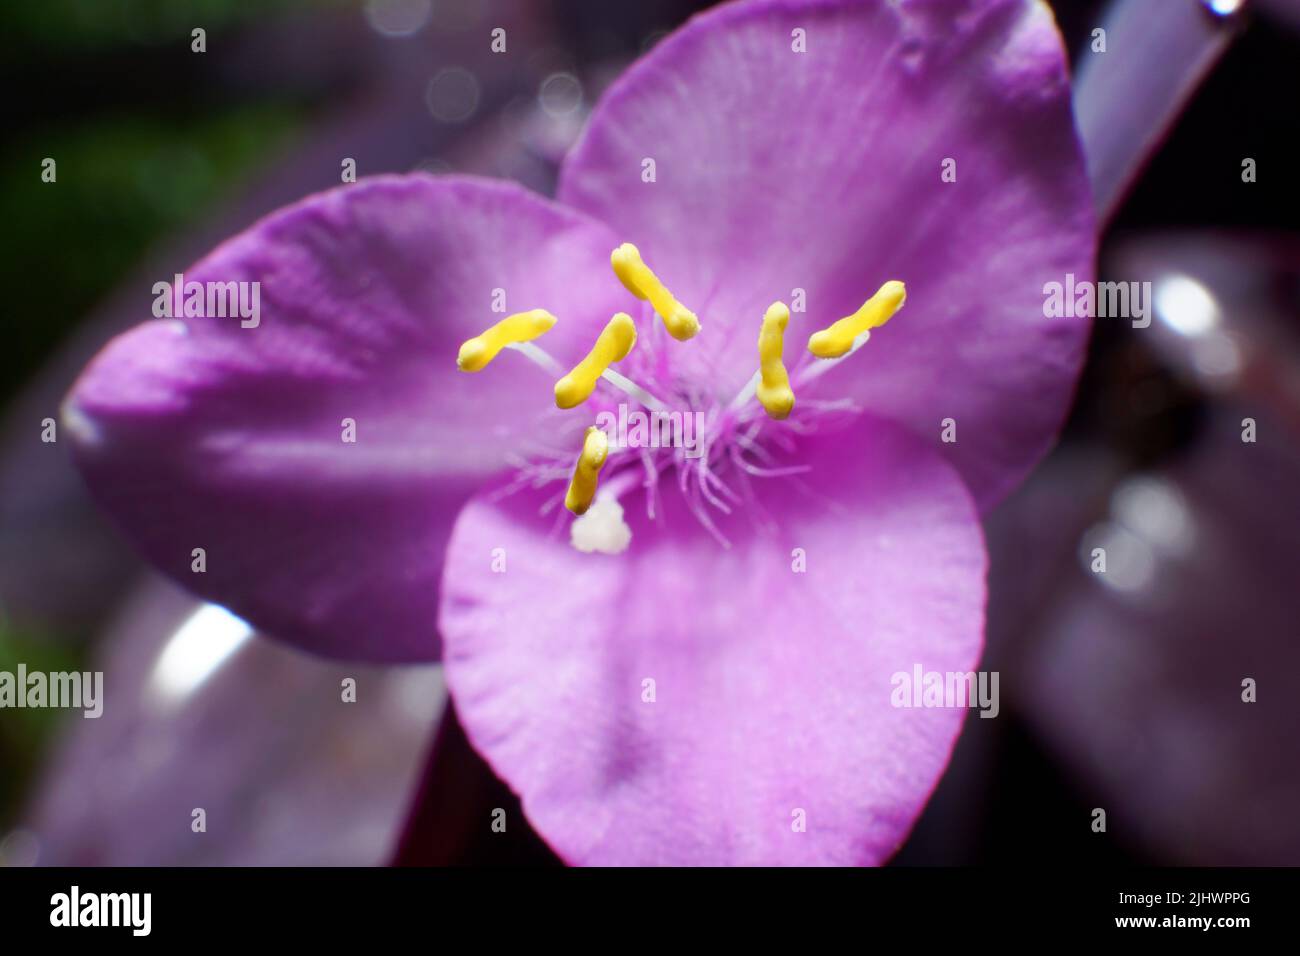 A beautiful purple tradescantia flower blooming in a garden Stock Photo